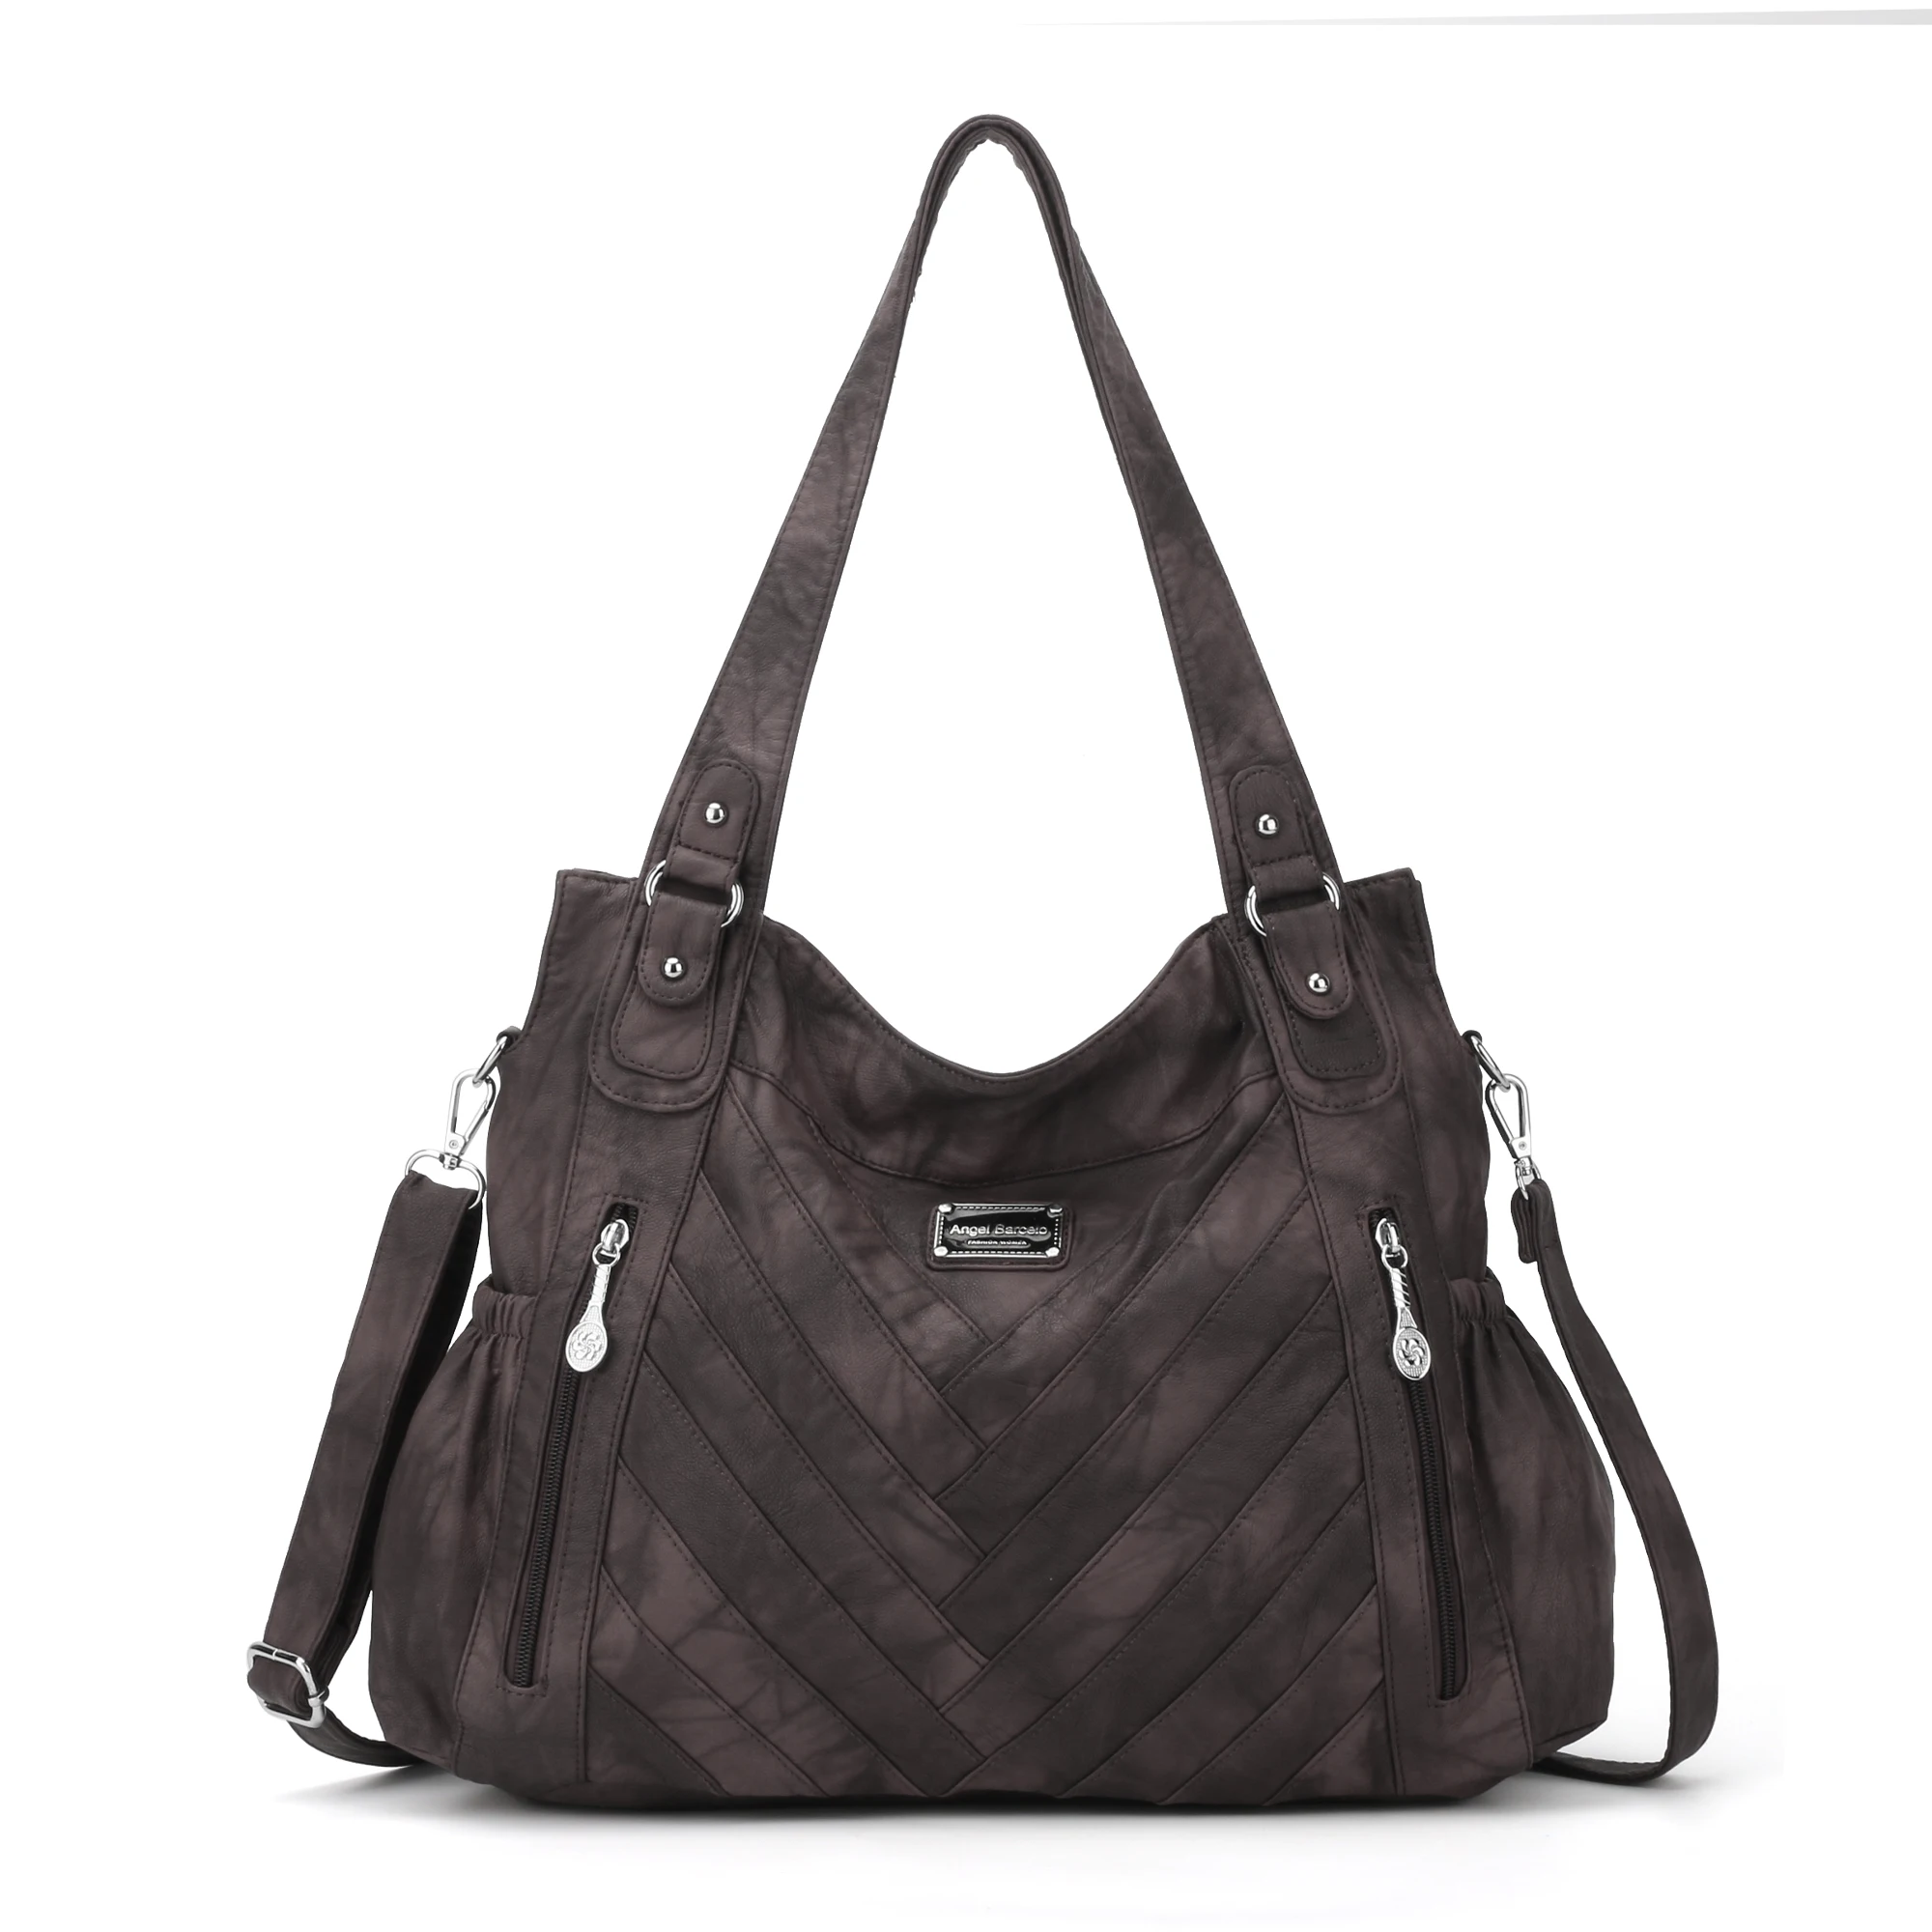 

Angel Kiss Brand PU Material Women Handbag Roomy Hobo Lady Shoulder Bag Fashion Tote with Adjustable Long Strap